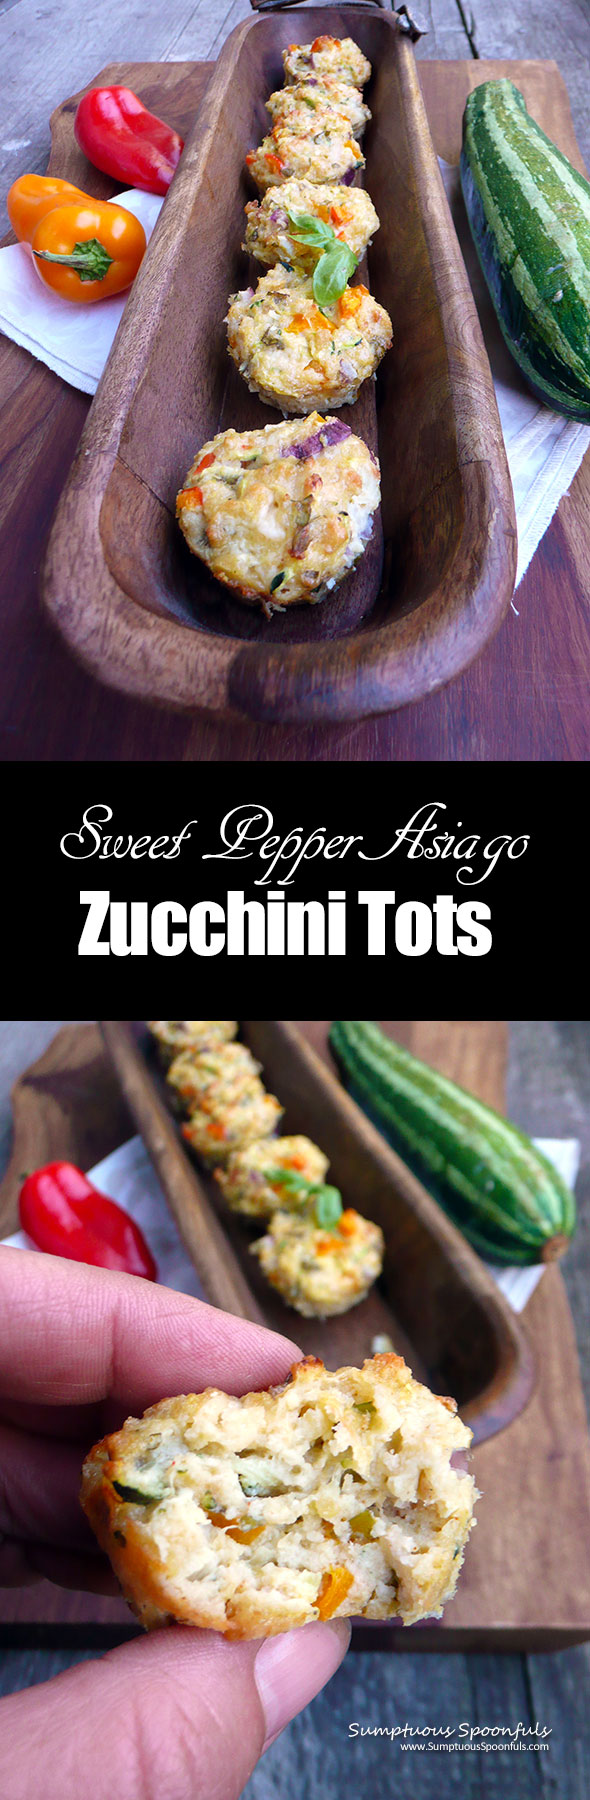 Sweet Pepper Asiago Zucchini Tots ~ Sumptuous Spoonfuls #zucchini #recipe